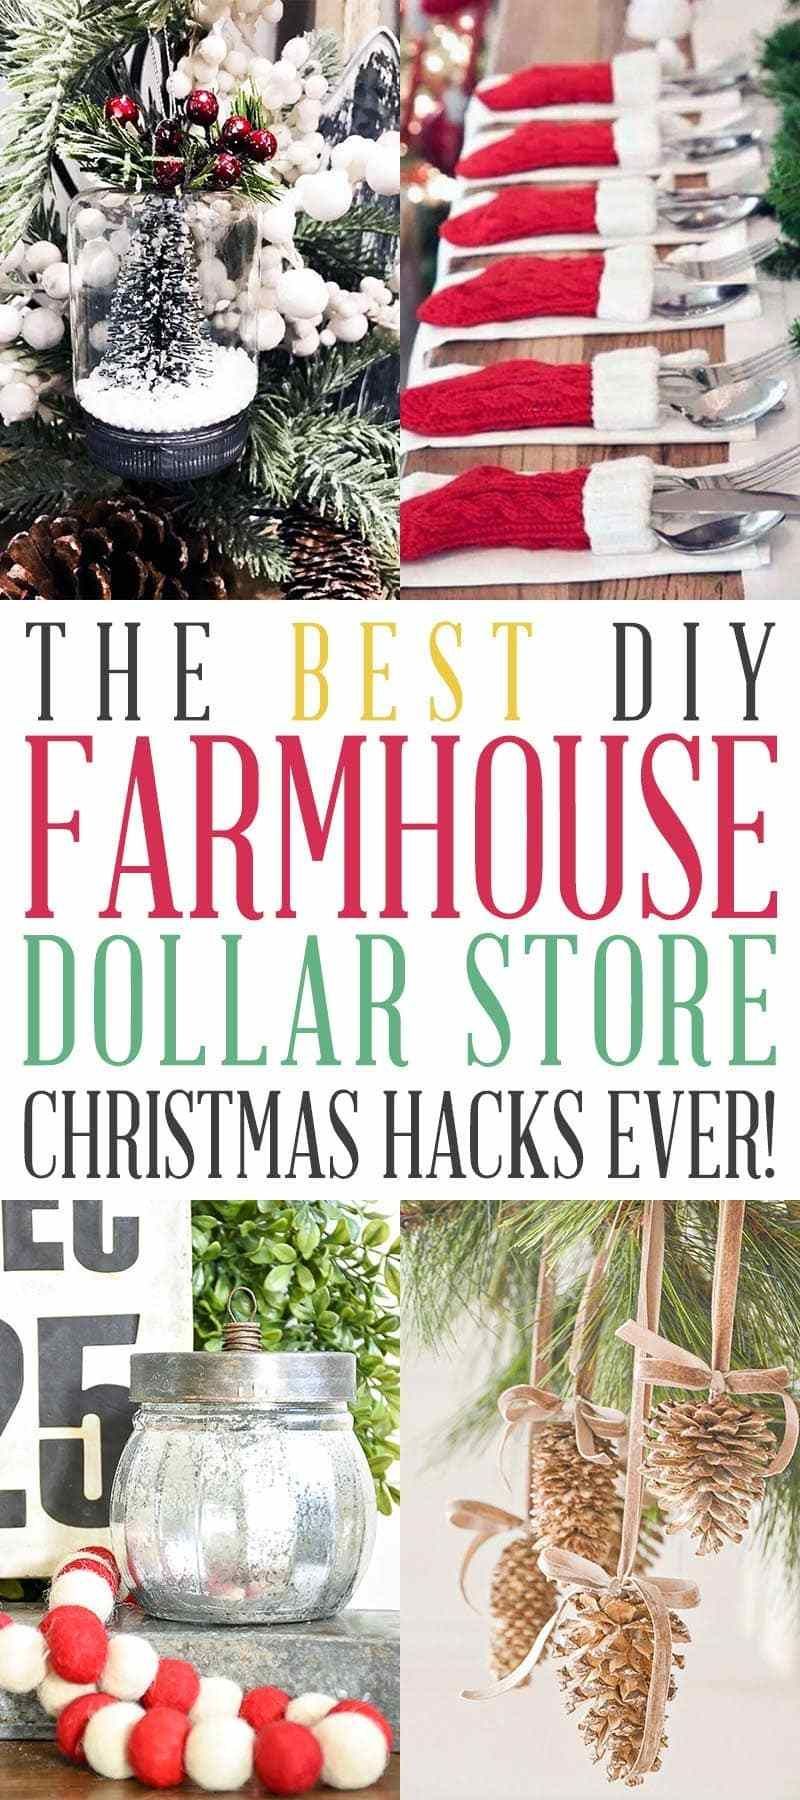 The Best DIY Farmhouse Dollar Store Christmas Hacks Ever! - The Cottage Market -   23 diy christmas decorations dollar store ideas